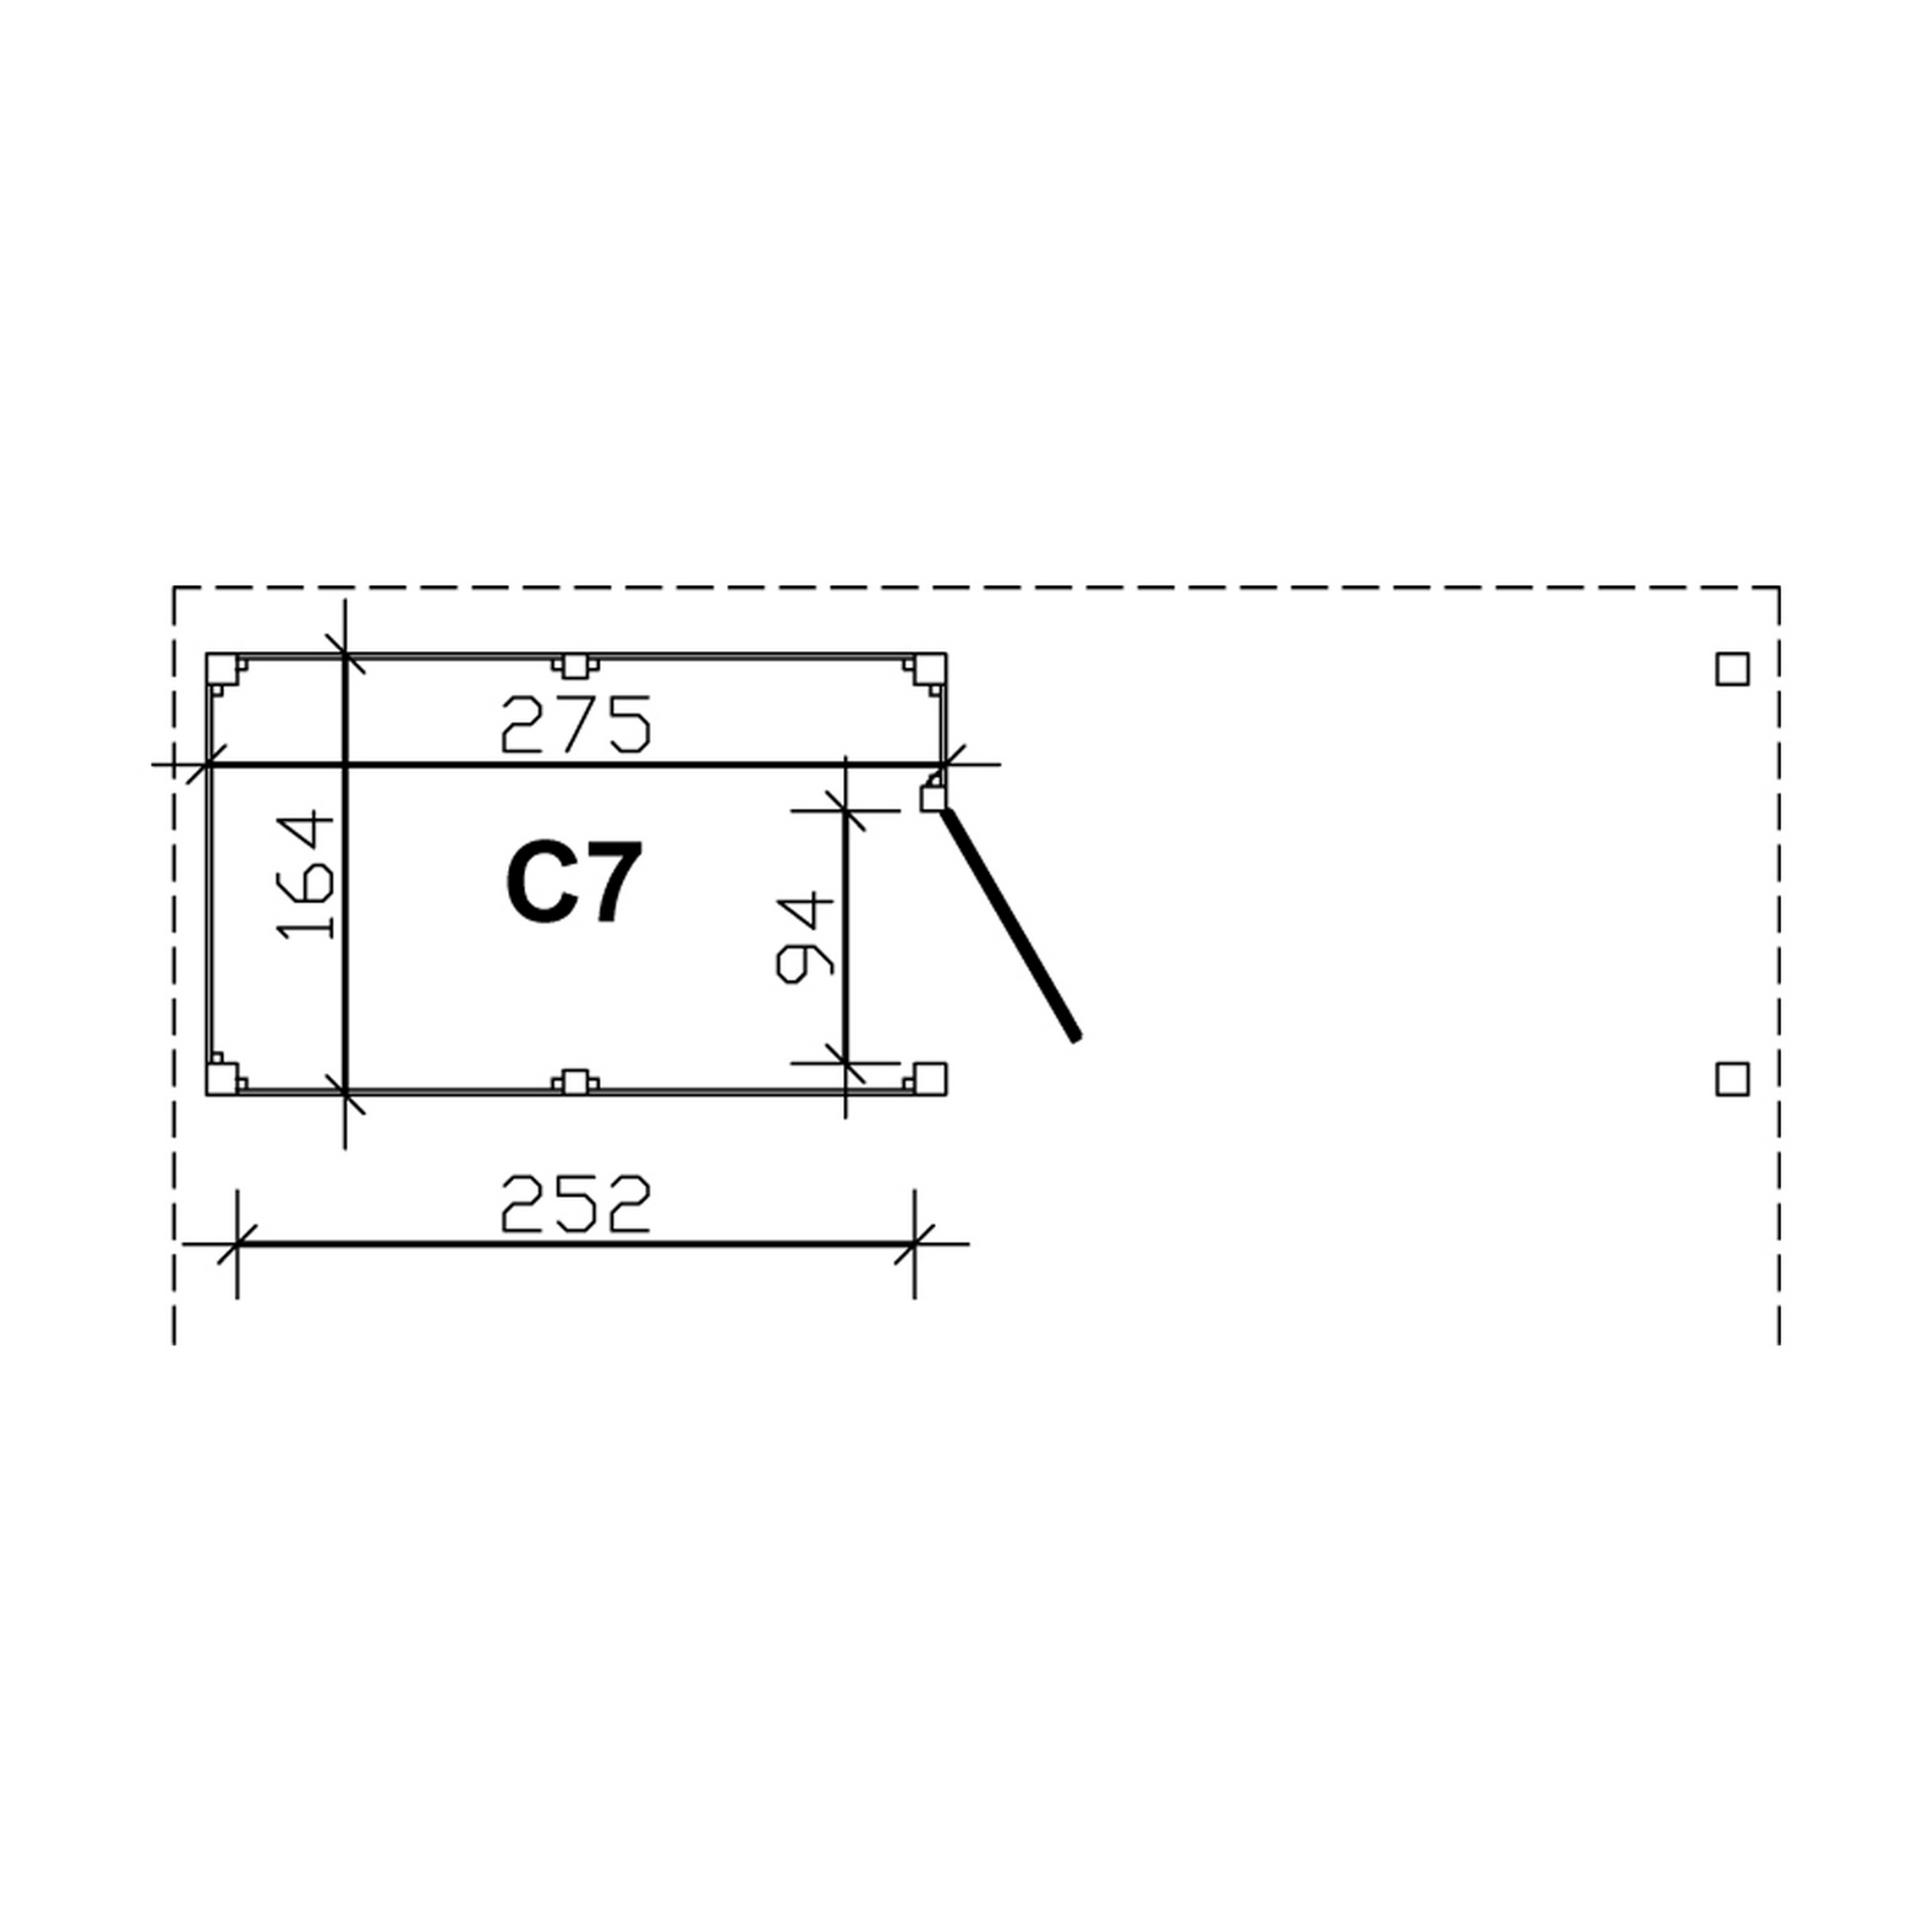 Carport-Abstellraum 'C7' aus Profilschalung 275 x 164 cm schiefergrau + product picture